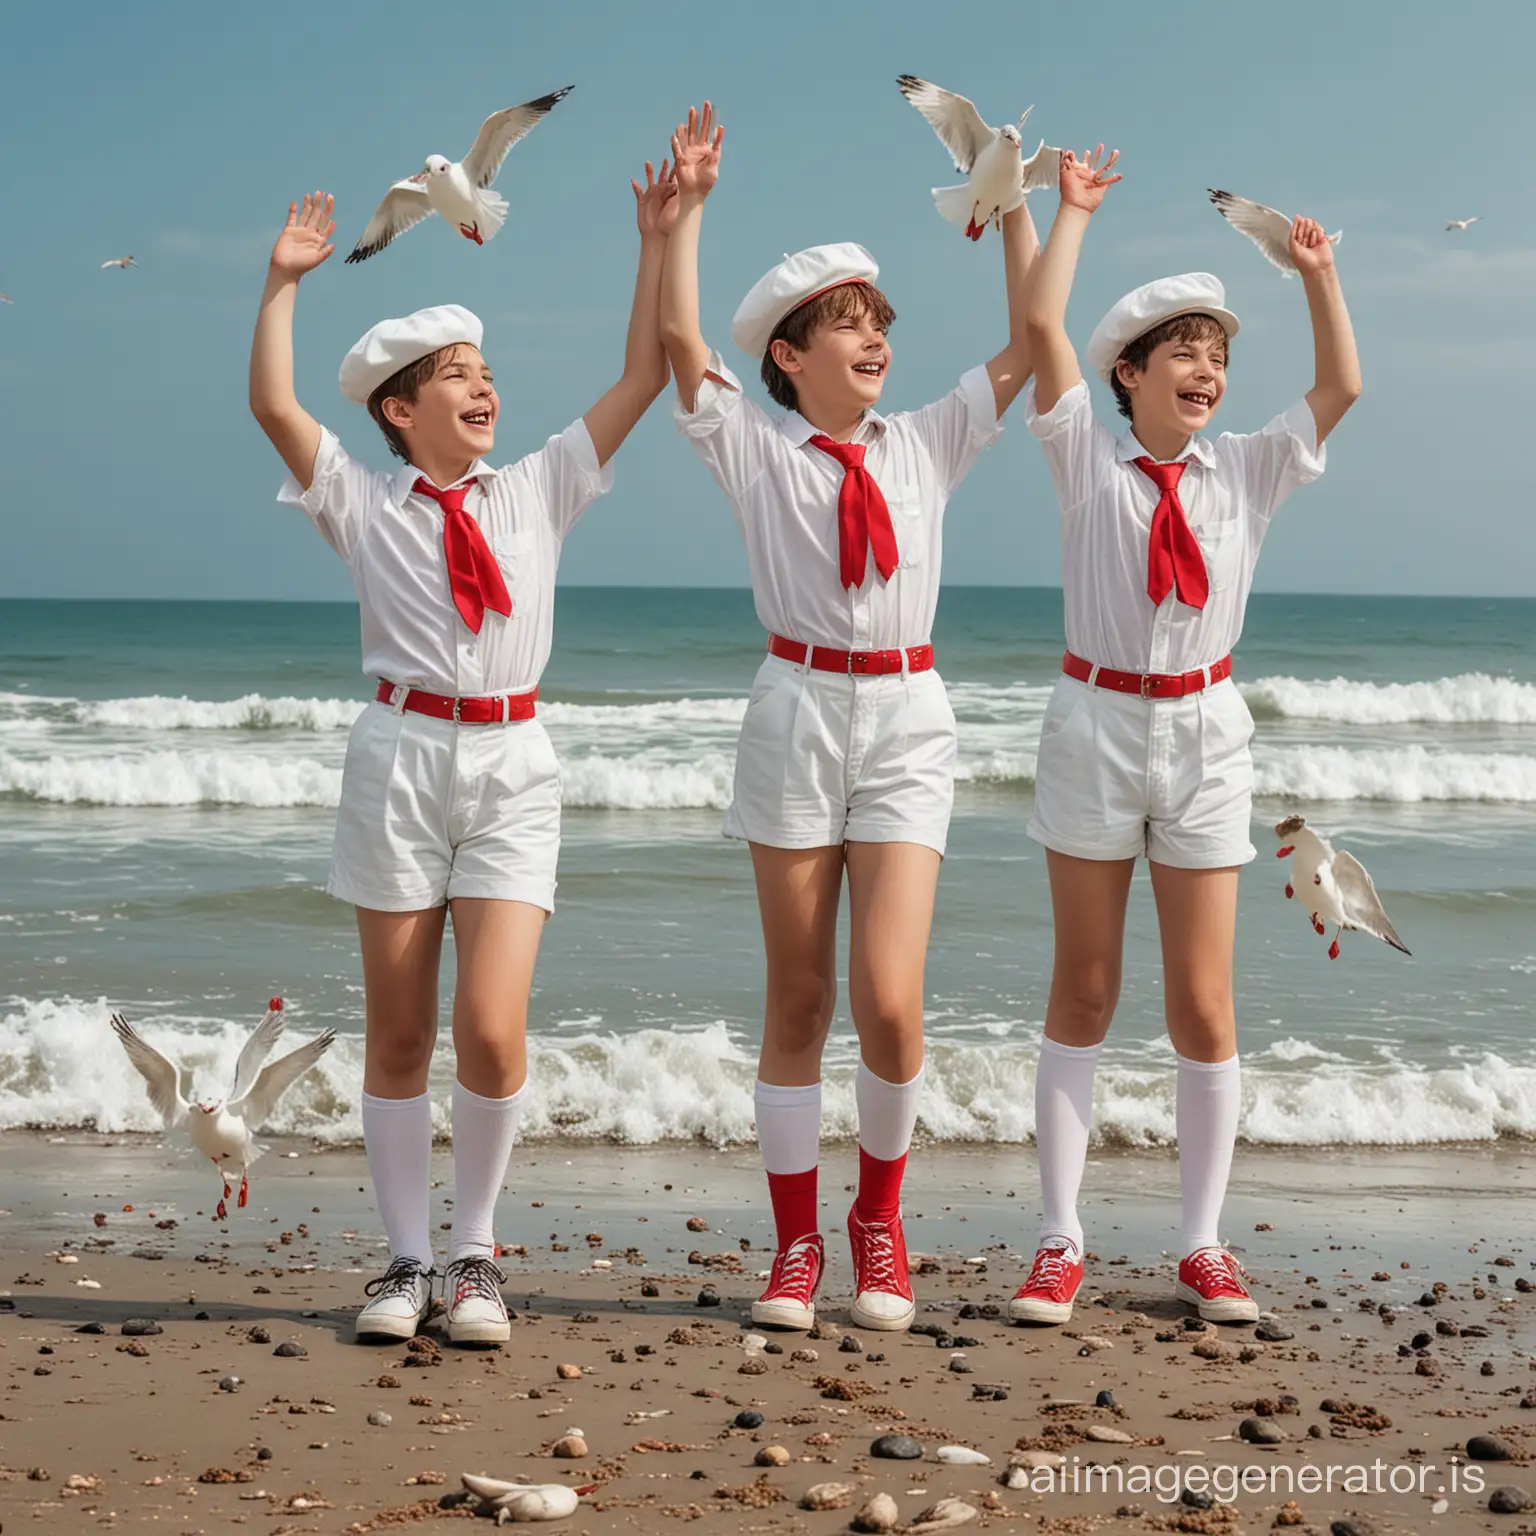 Joyful-Teenagers-in-Nautical-Outfits-Waving-by-the-Seashore